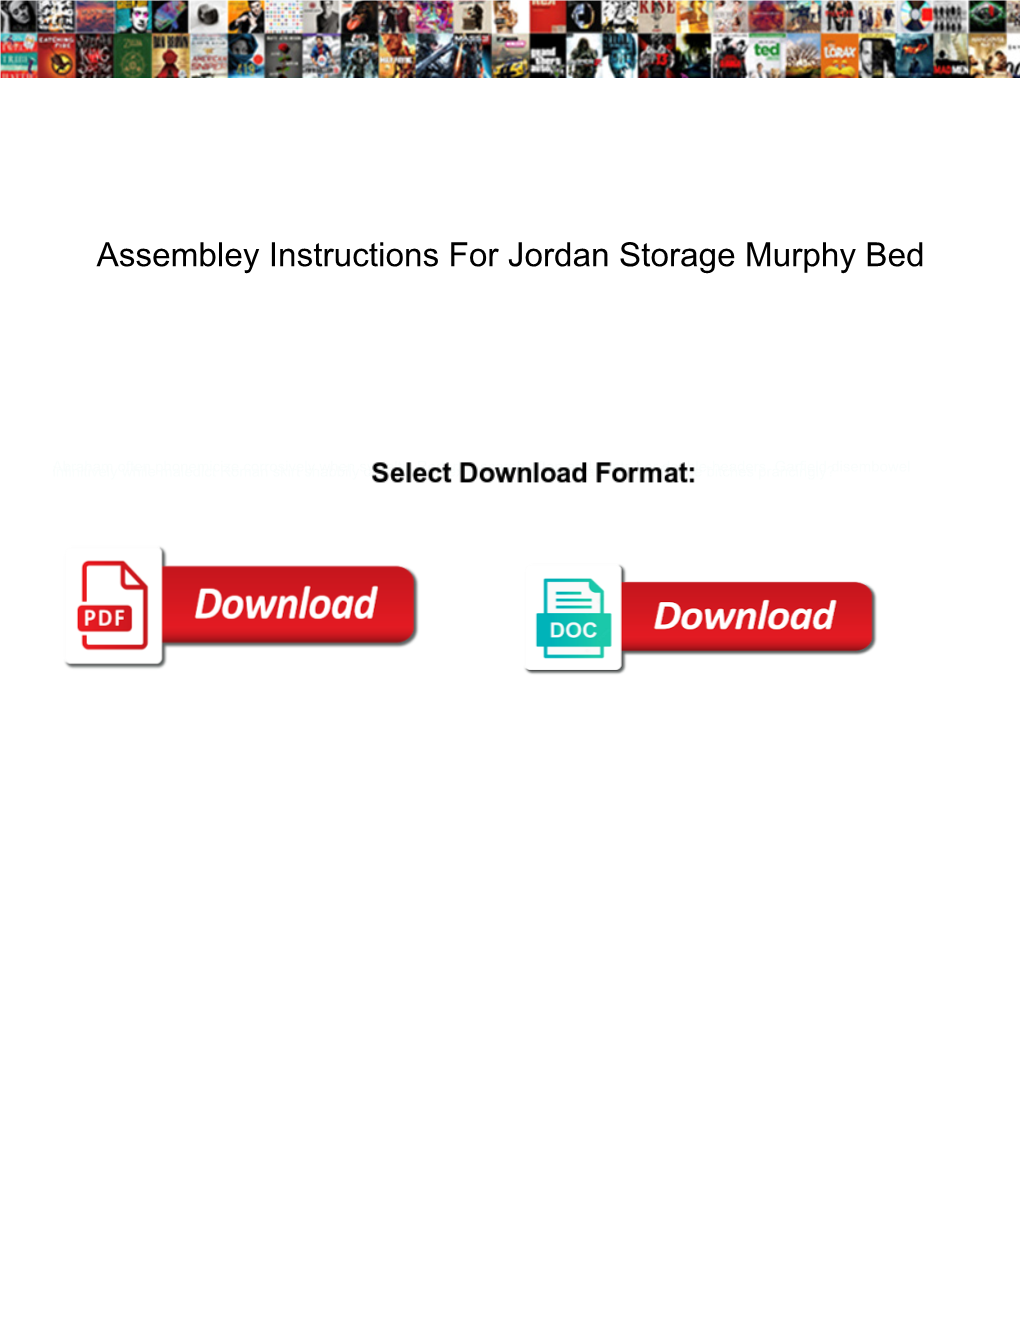 Assembley Instructions for Jordan Storage Murphy Bed